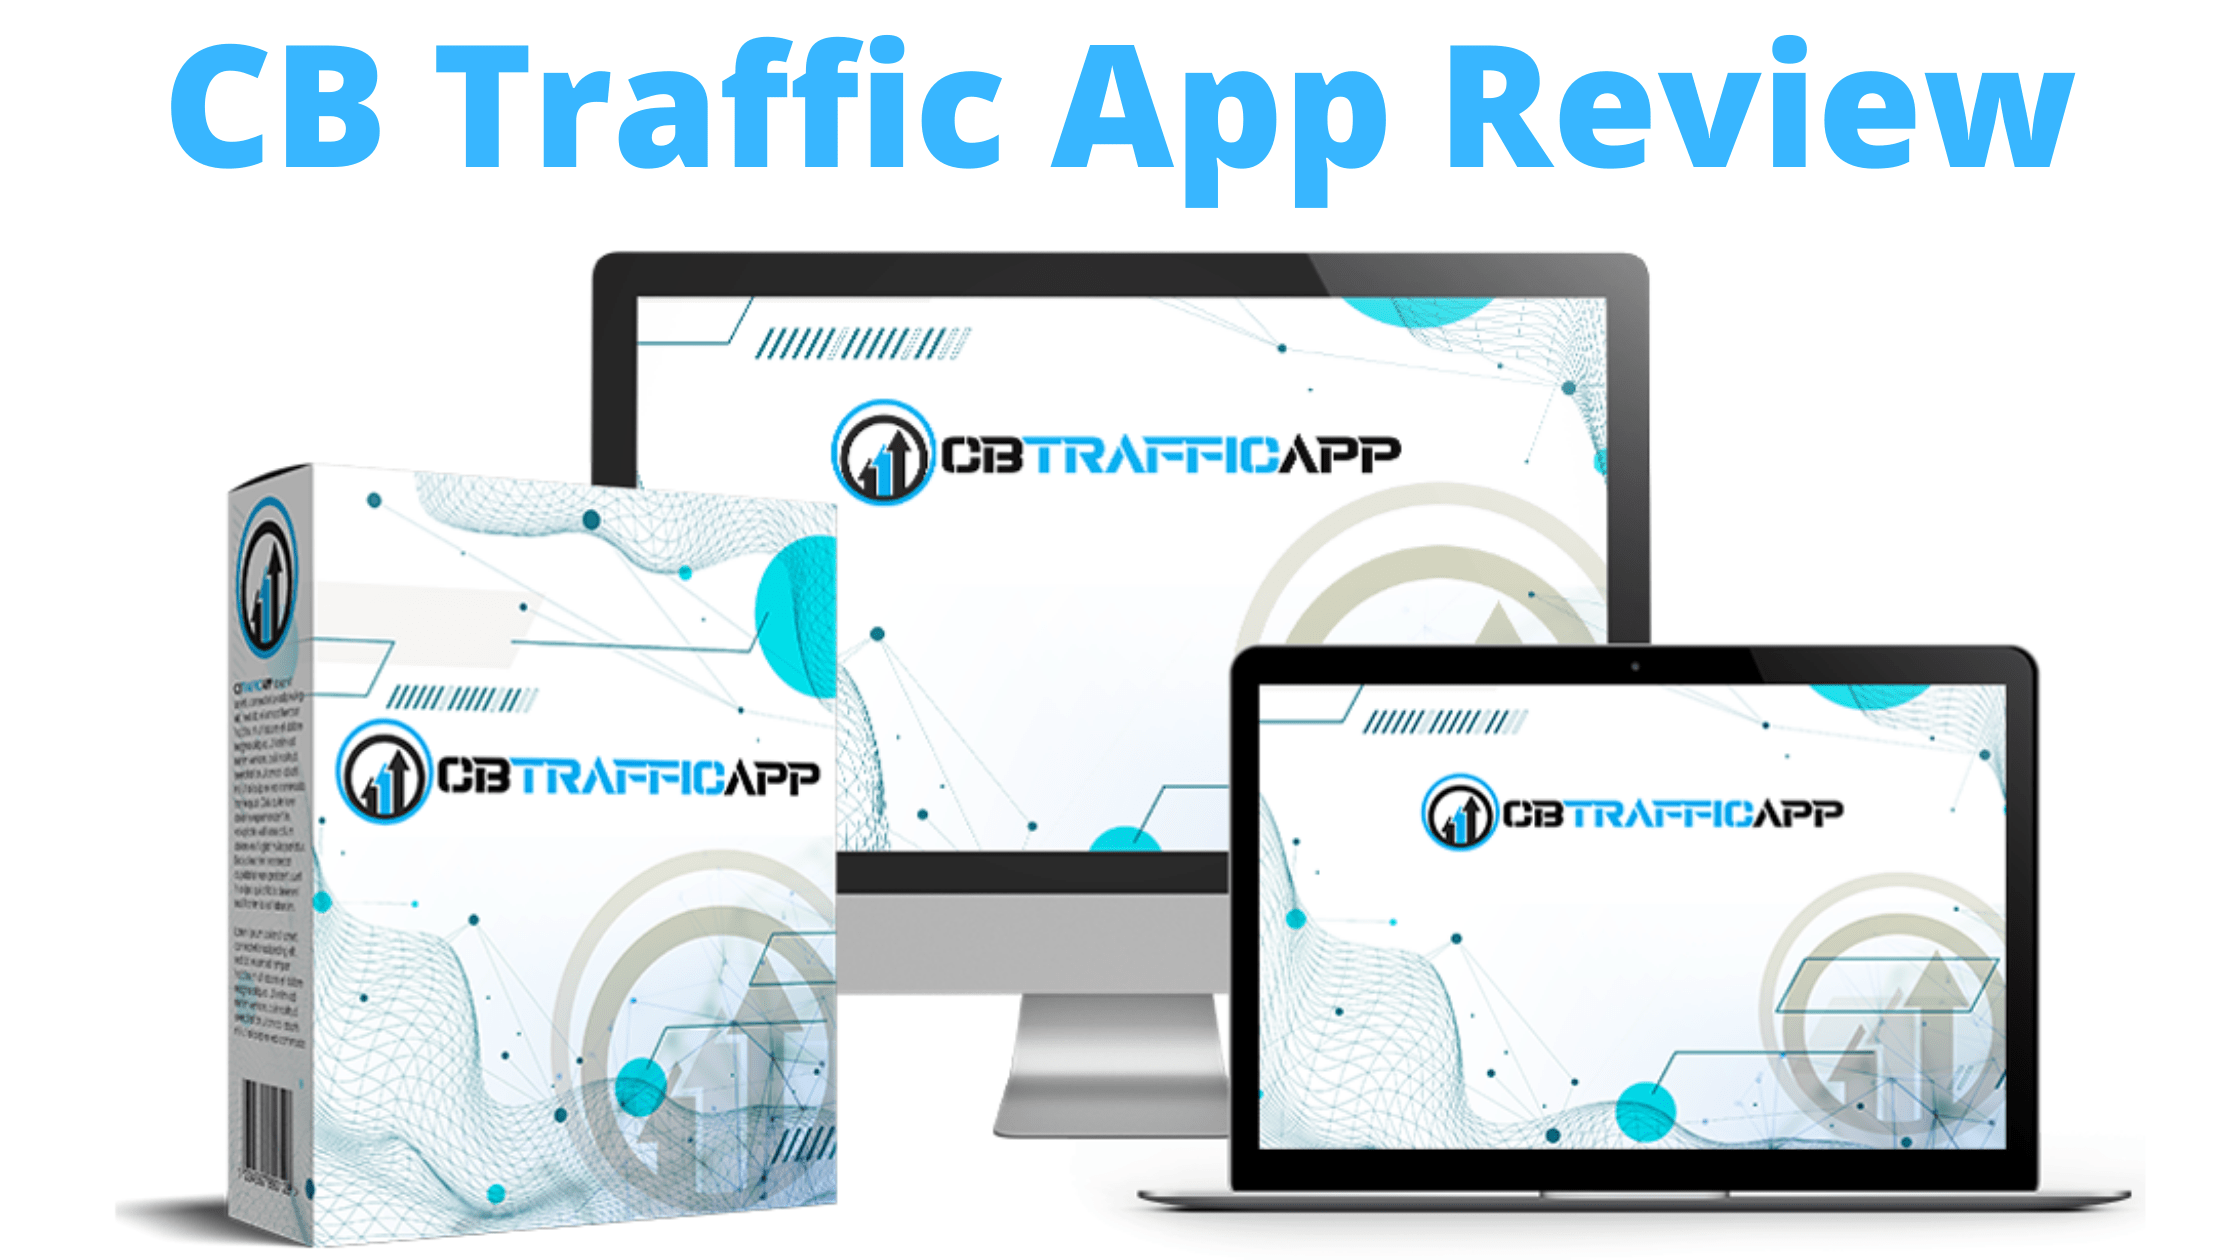 CB Traffic App Review